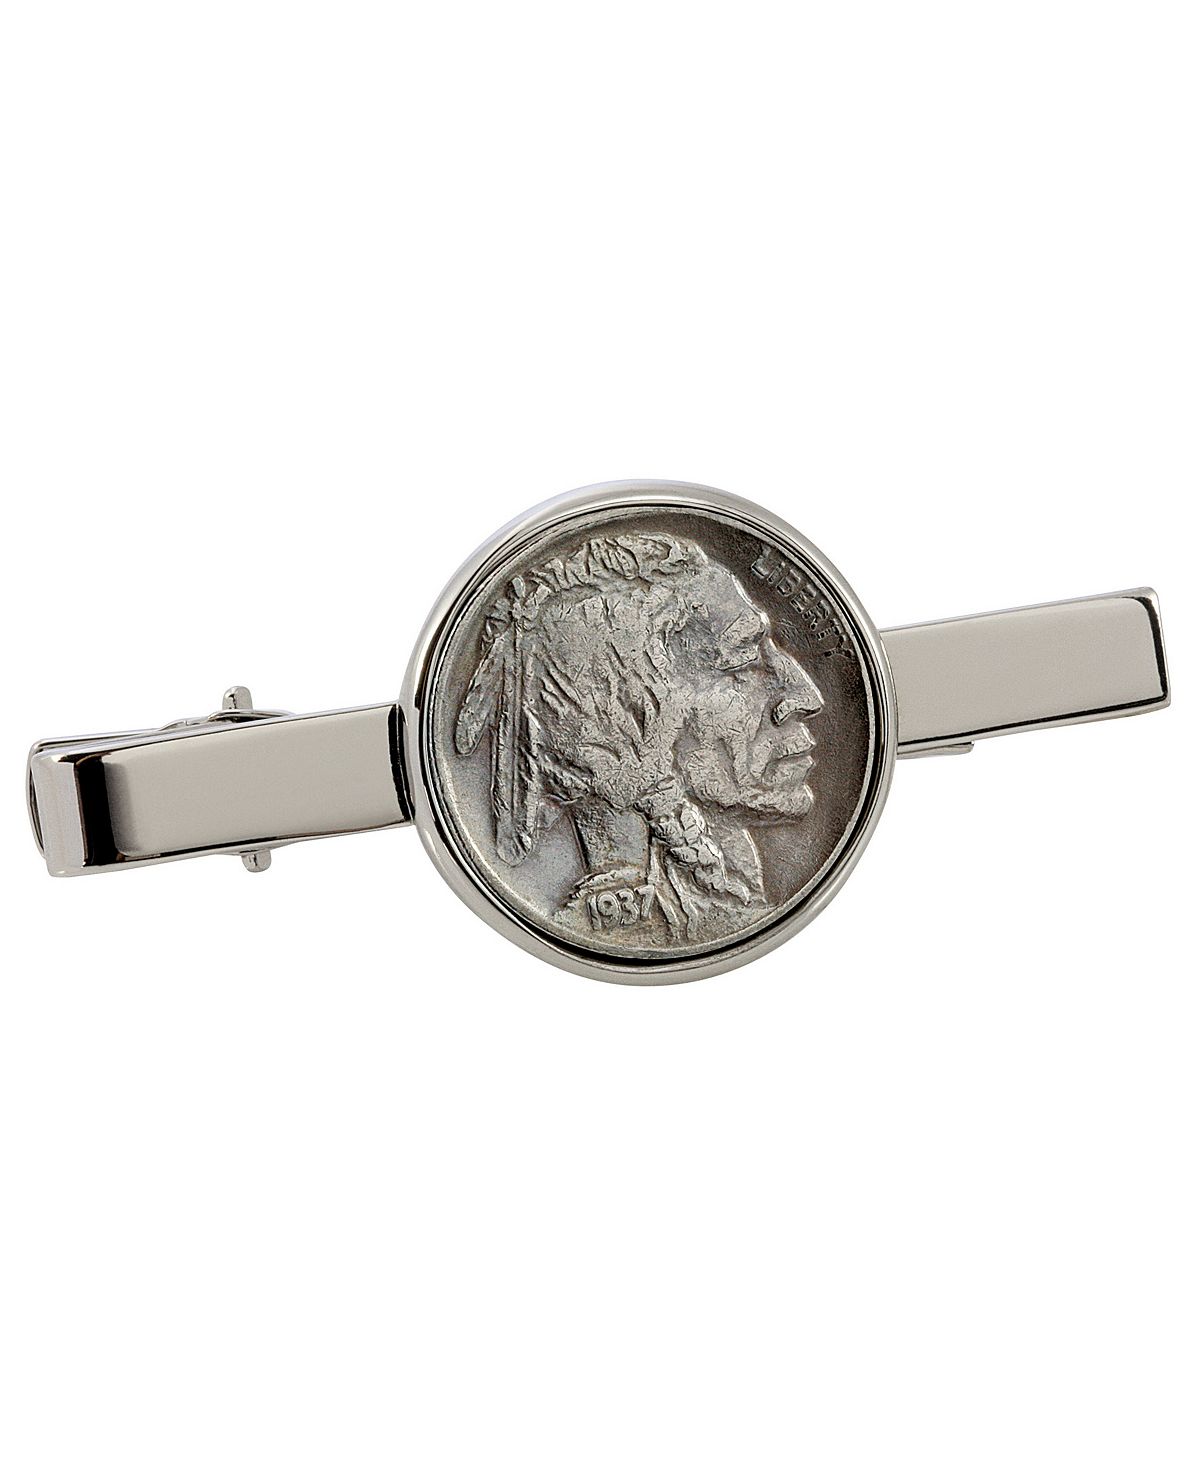 Зажим для галстука в виде никелевой монеты Buffalo American Coin Treasures 1 trillion dollar coin gold plated collection metal coin silver coins